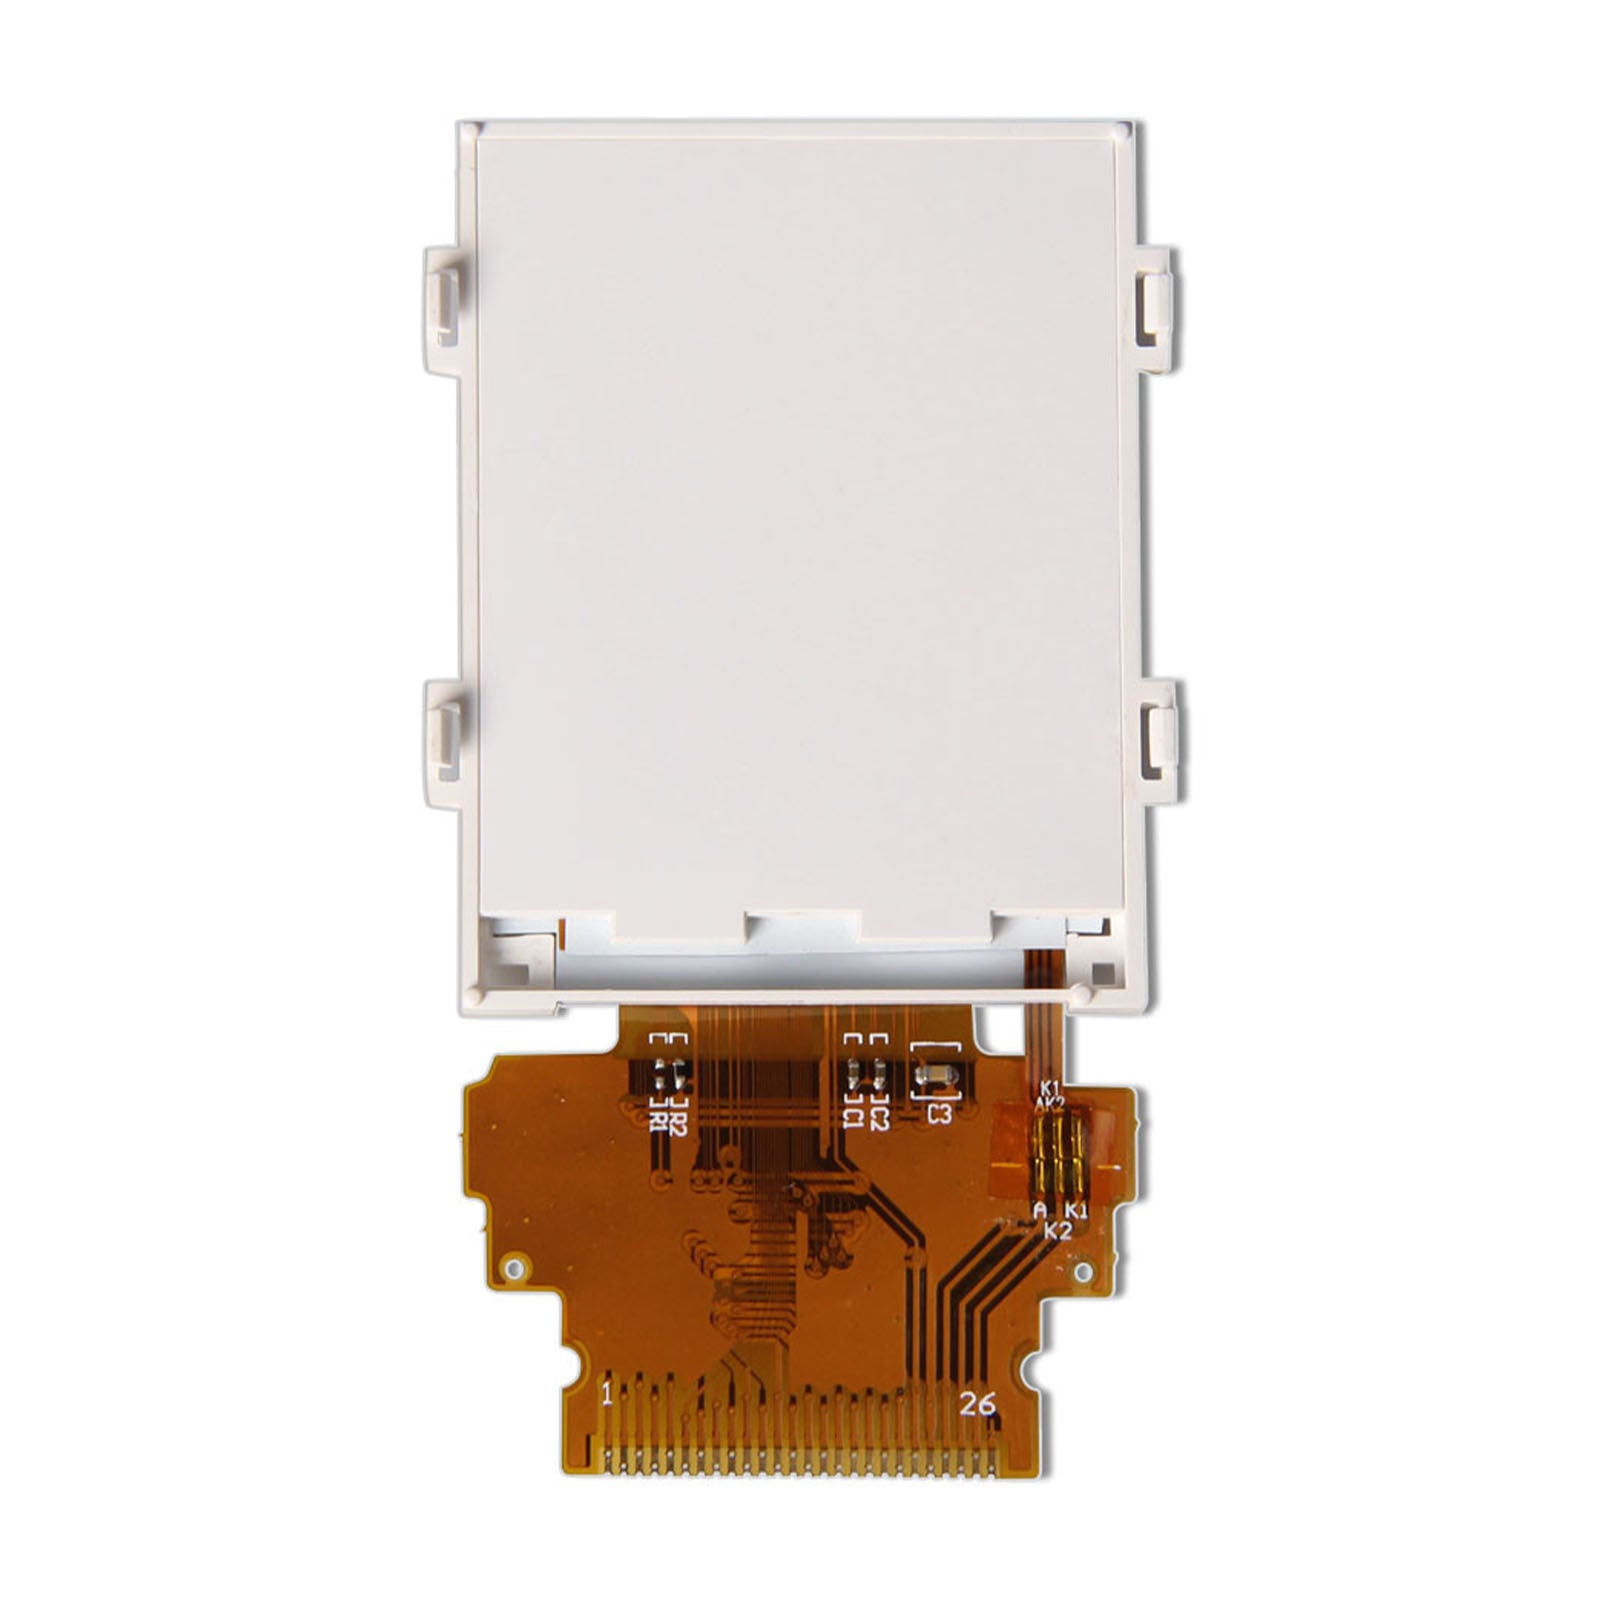 DisplayModule 1.77" 128x160 TFT LCD Display Panel - MCU, Hot-bar Soldering